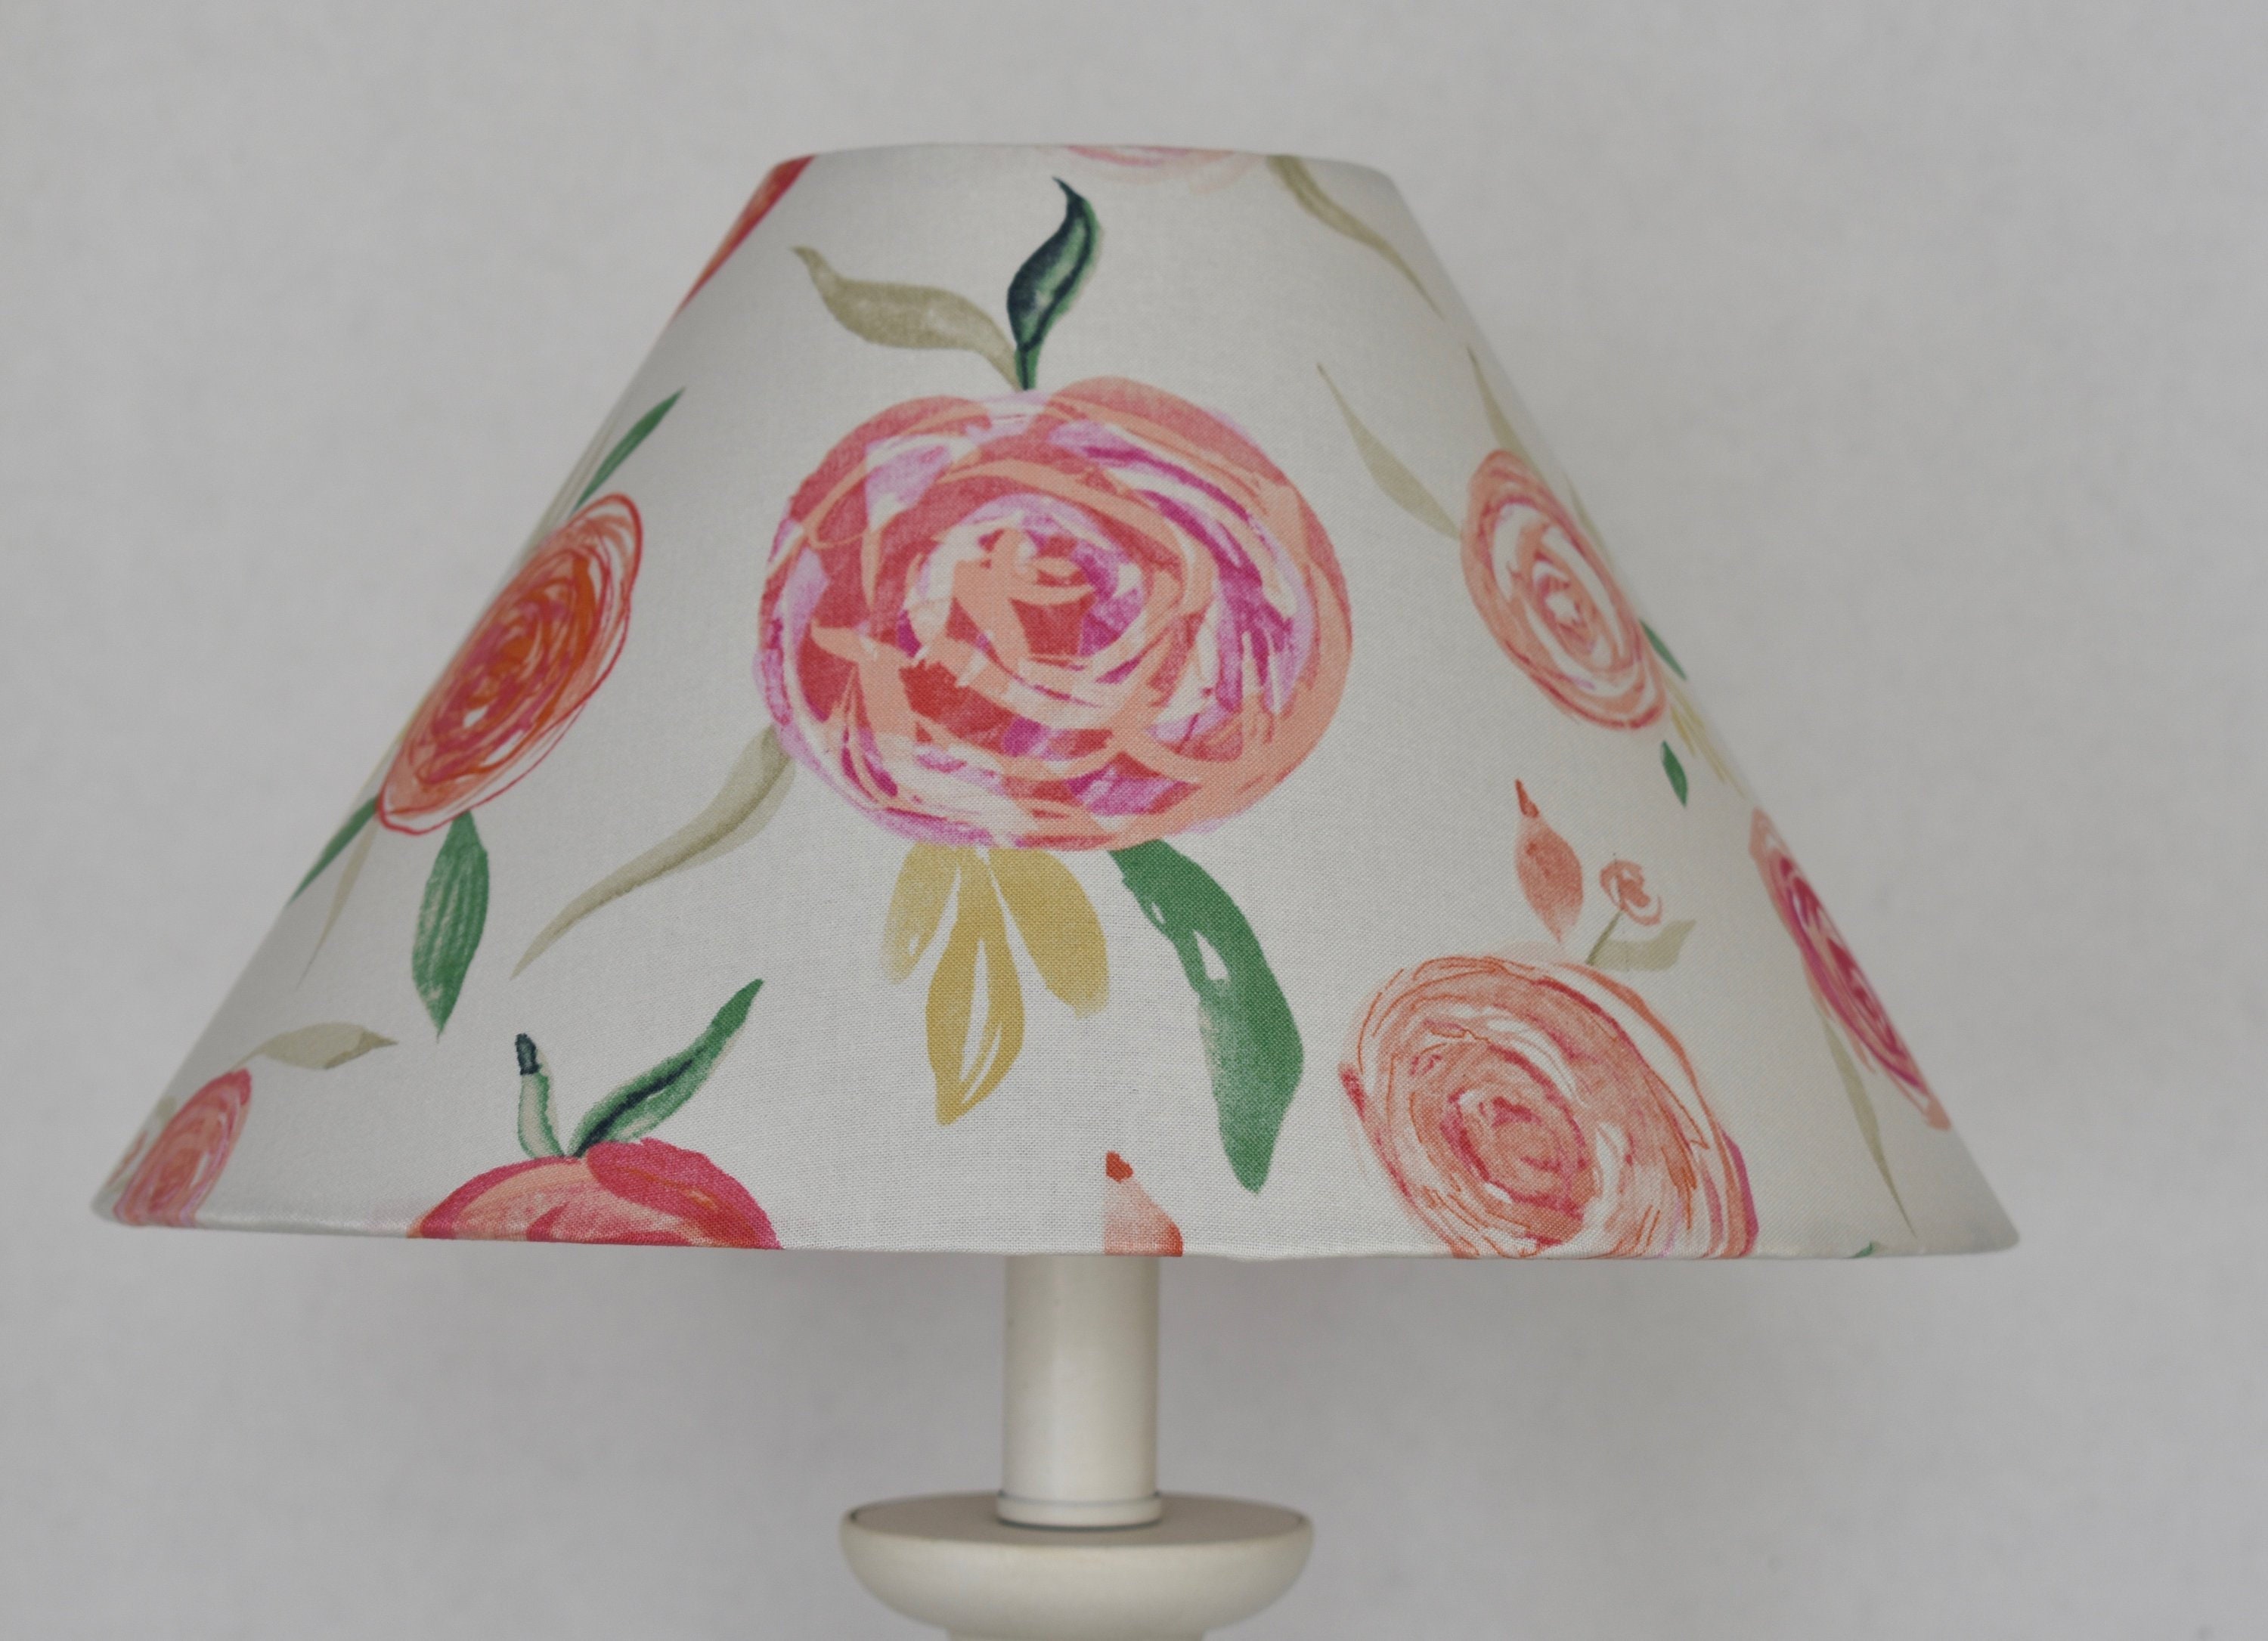 light pink lamp shade for nursery